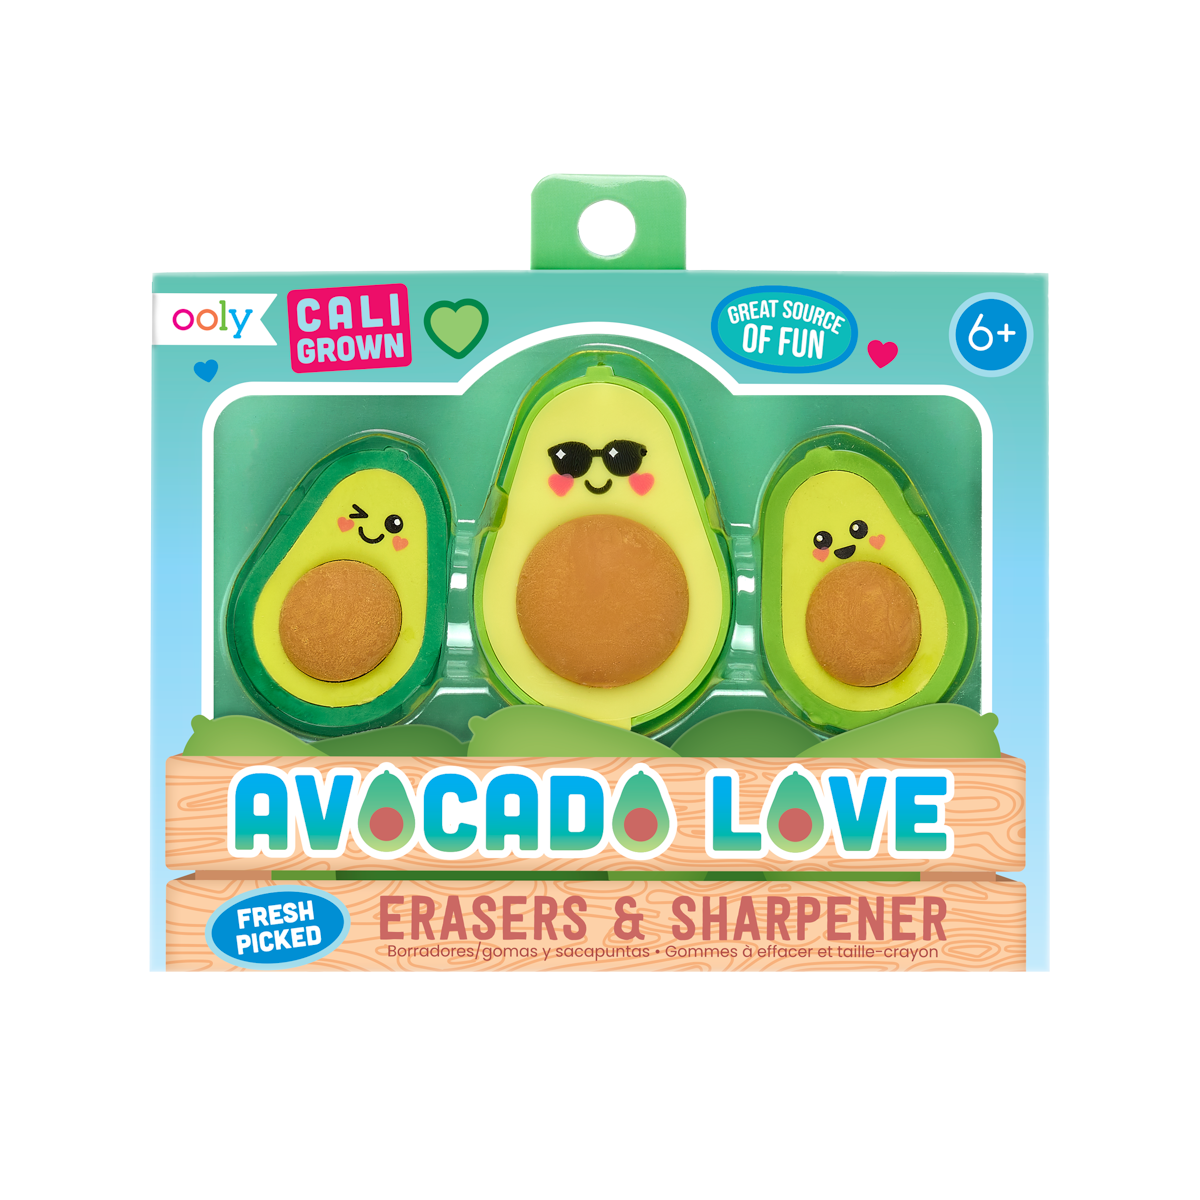 OOLY Avocado Love Eraser and Sharpener in packaging 